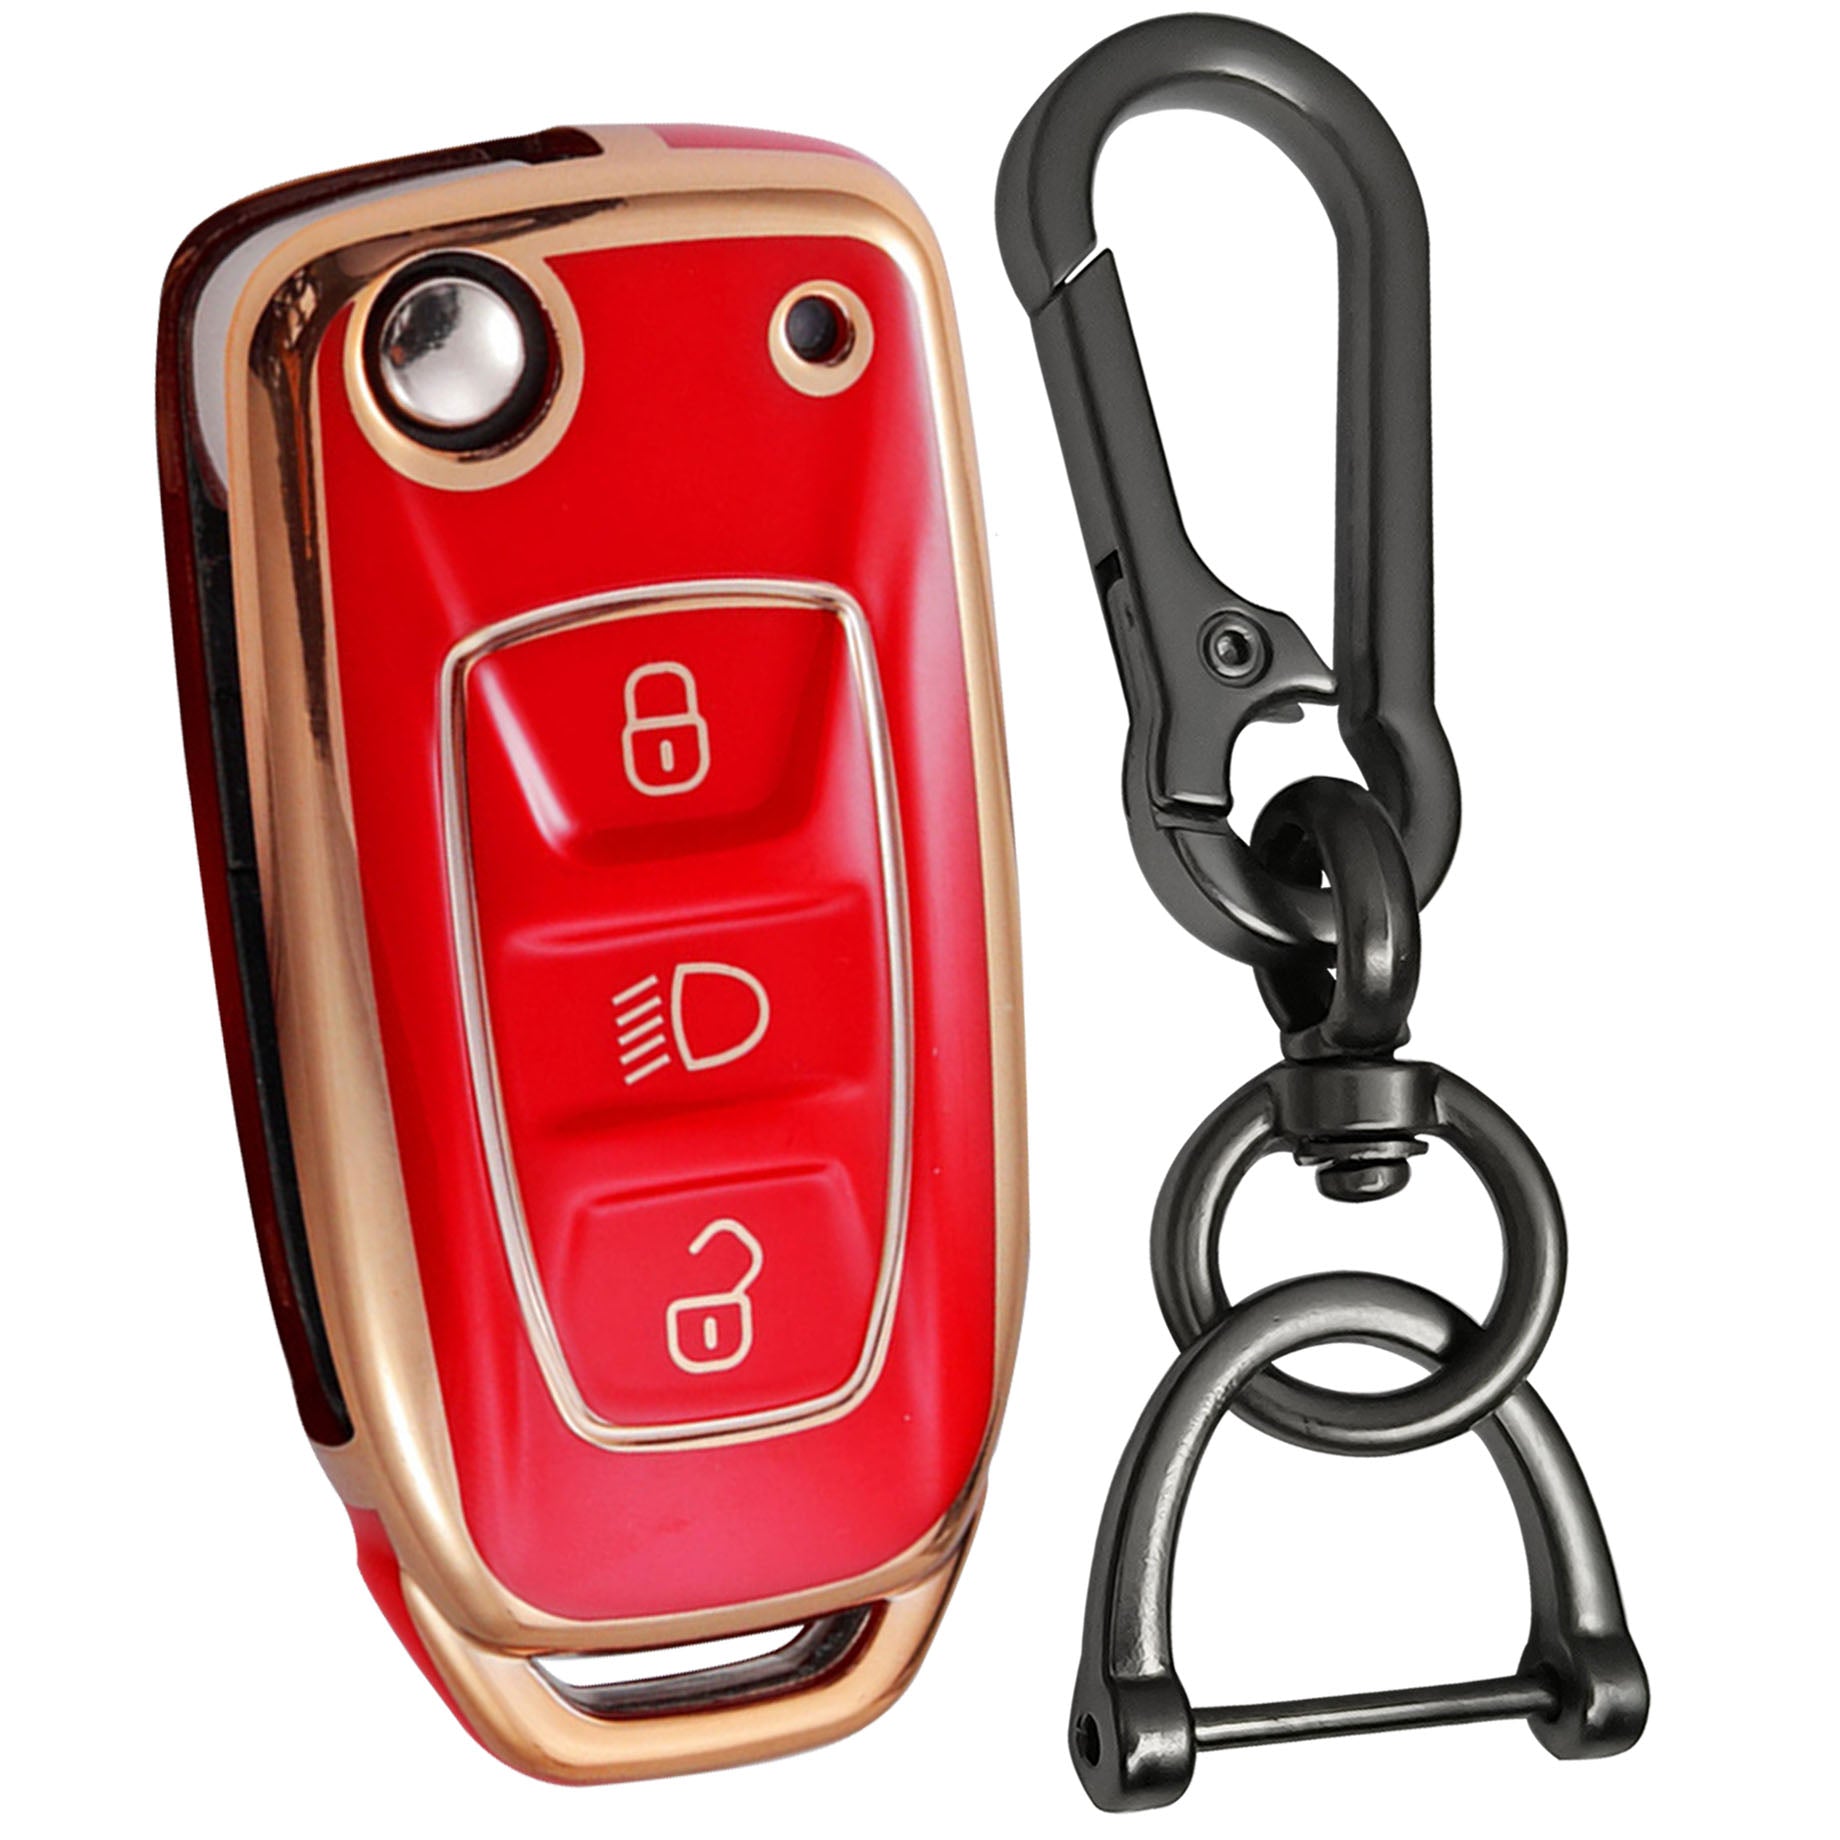 tata zest nexon hexa tiago 3b flip tpu red gold car key cover case accessories keychain